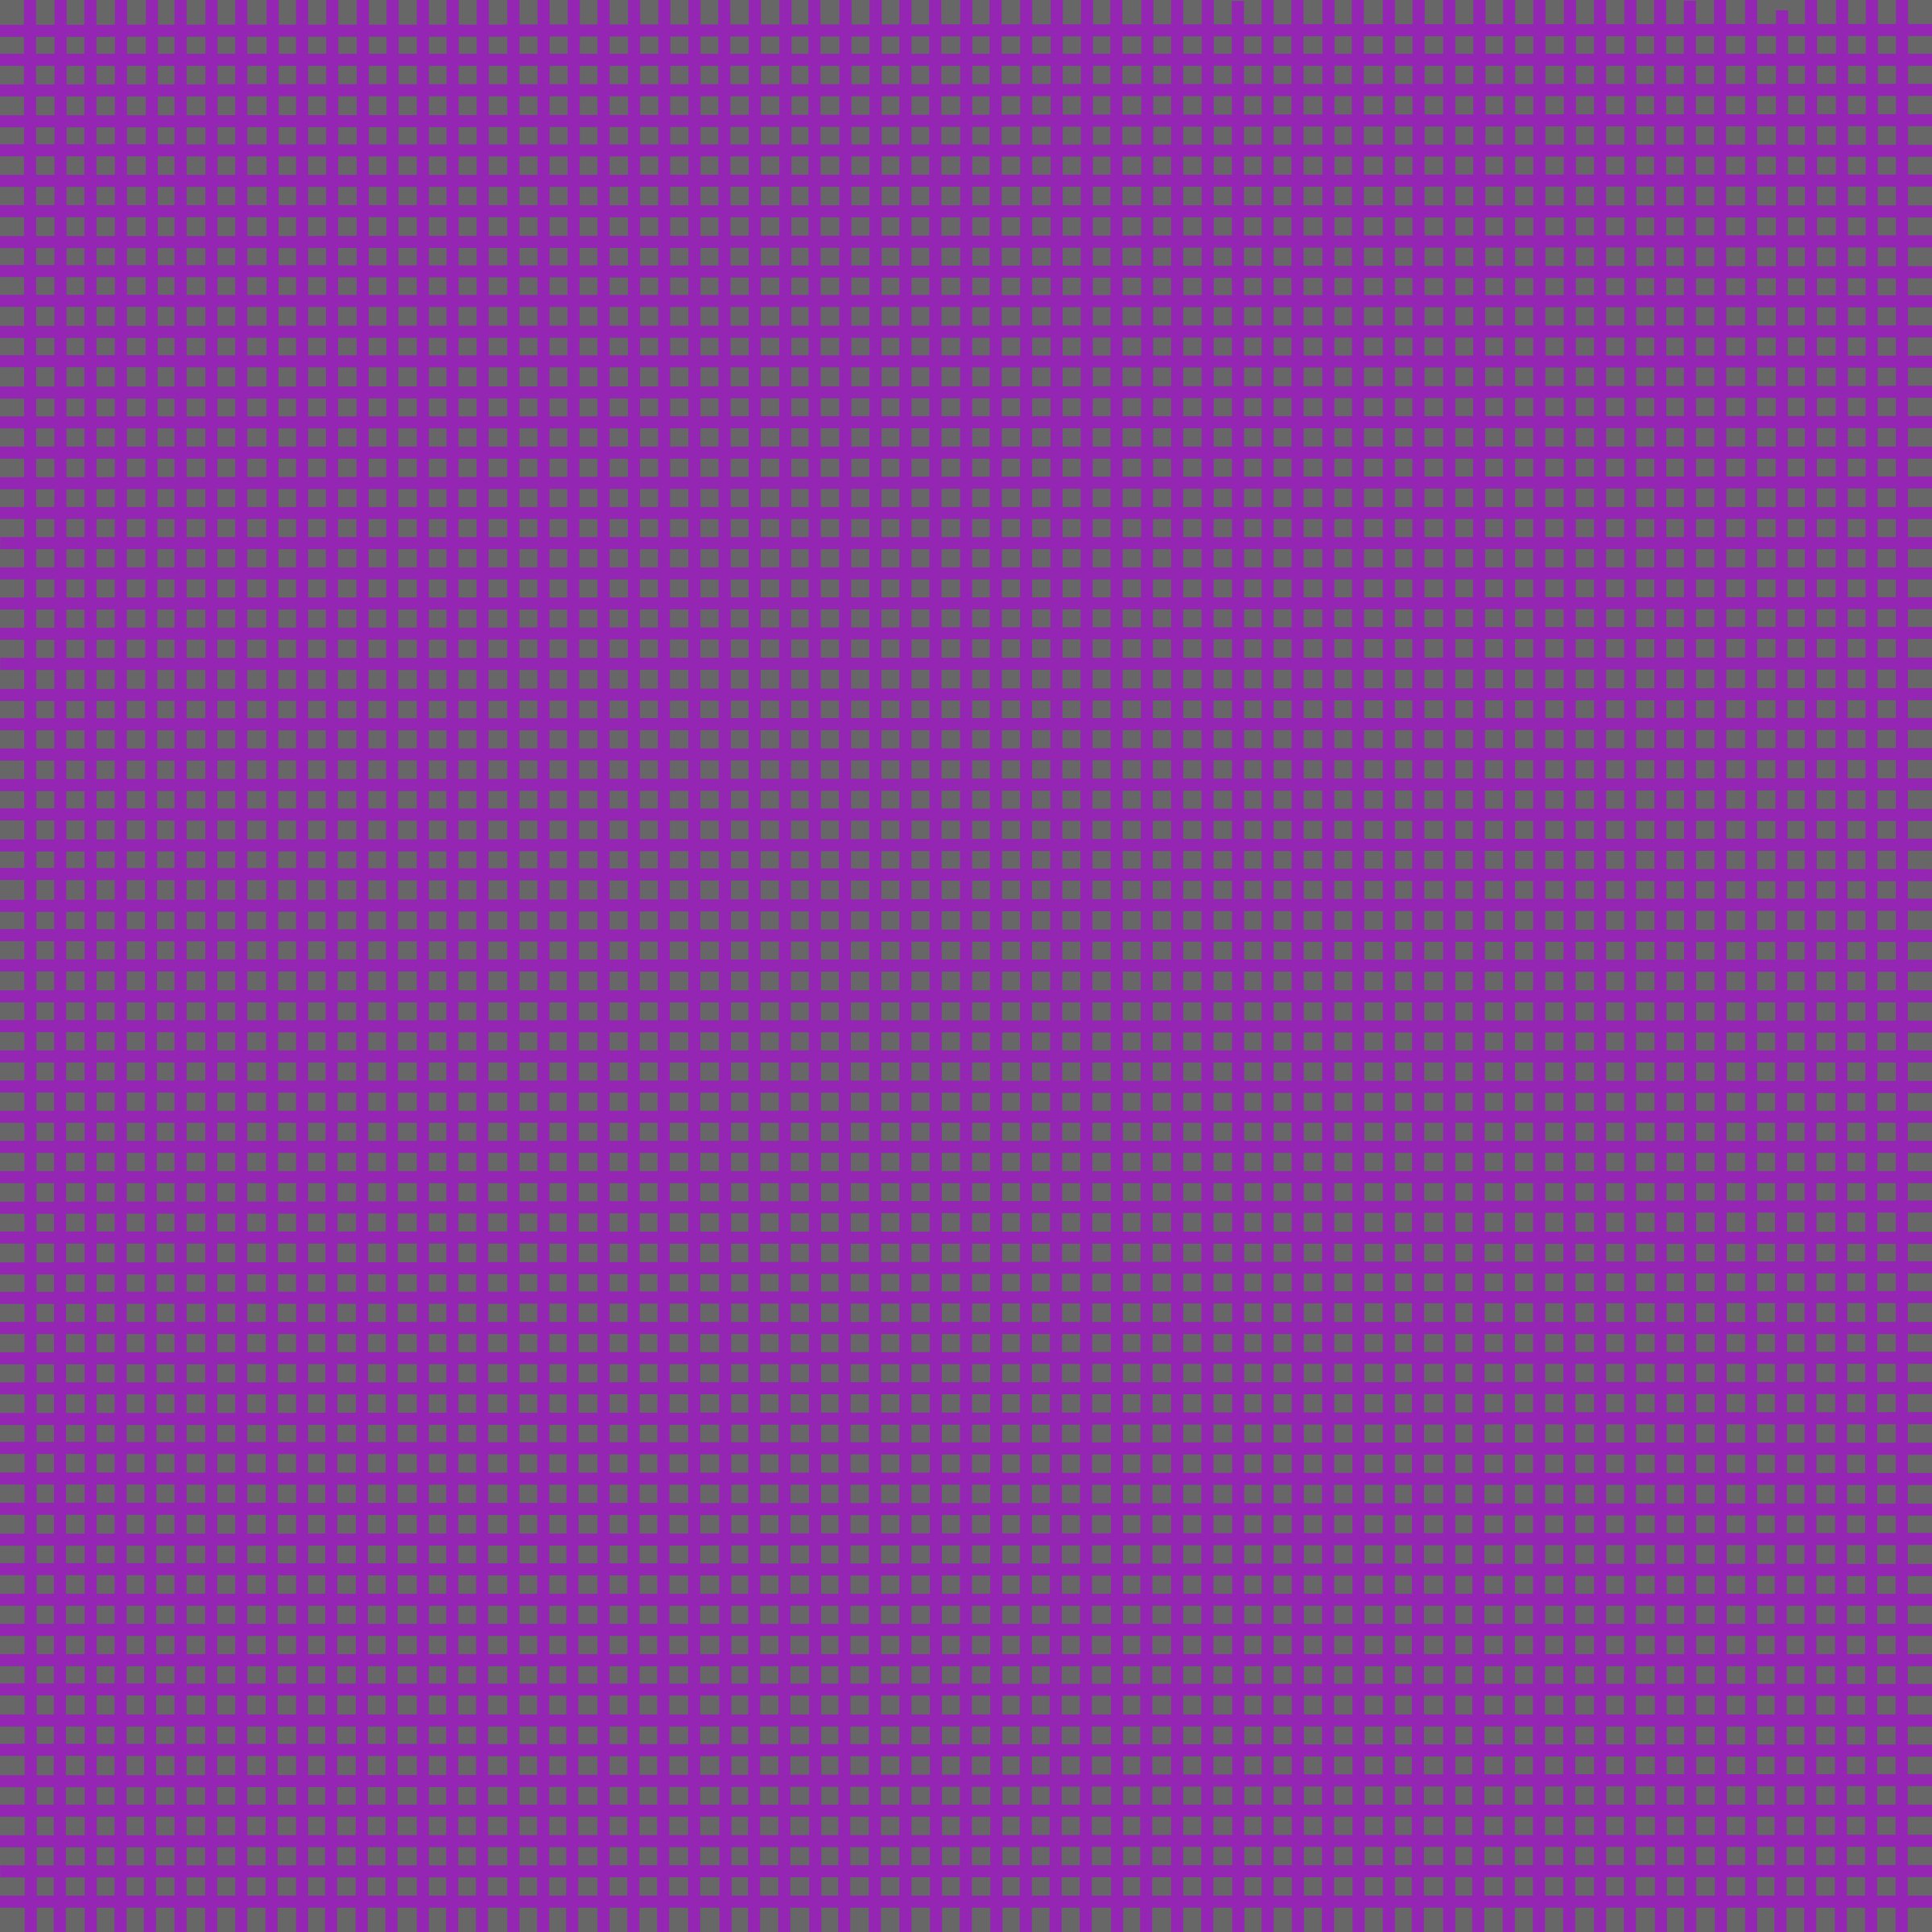 small grid 13 (violet).jpg